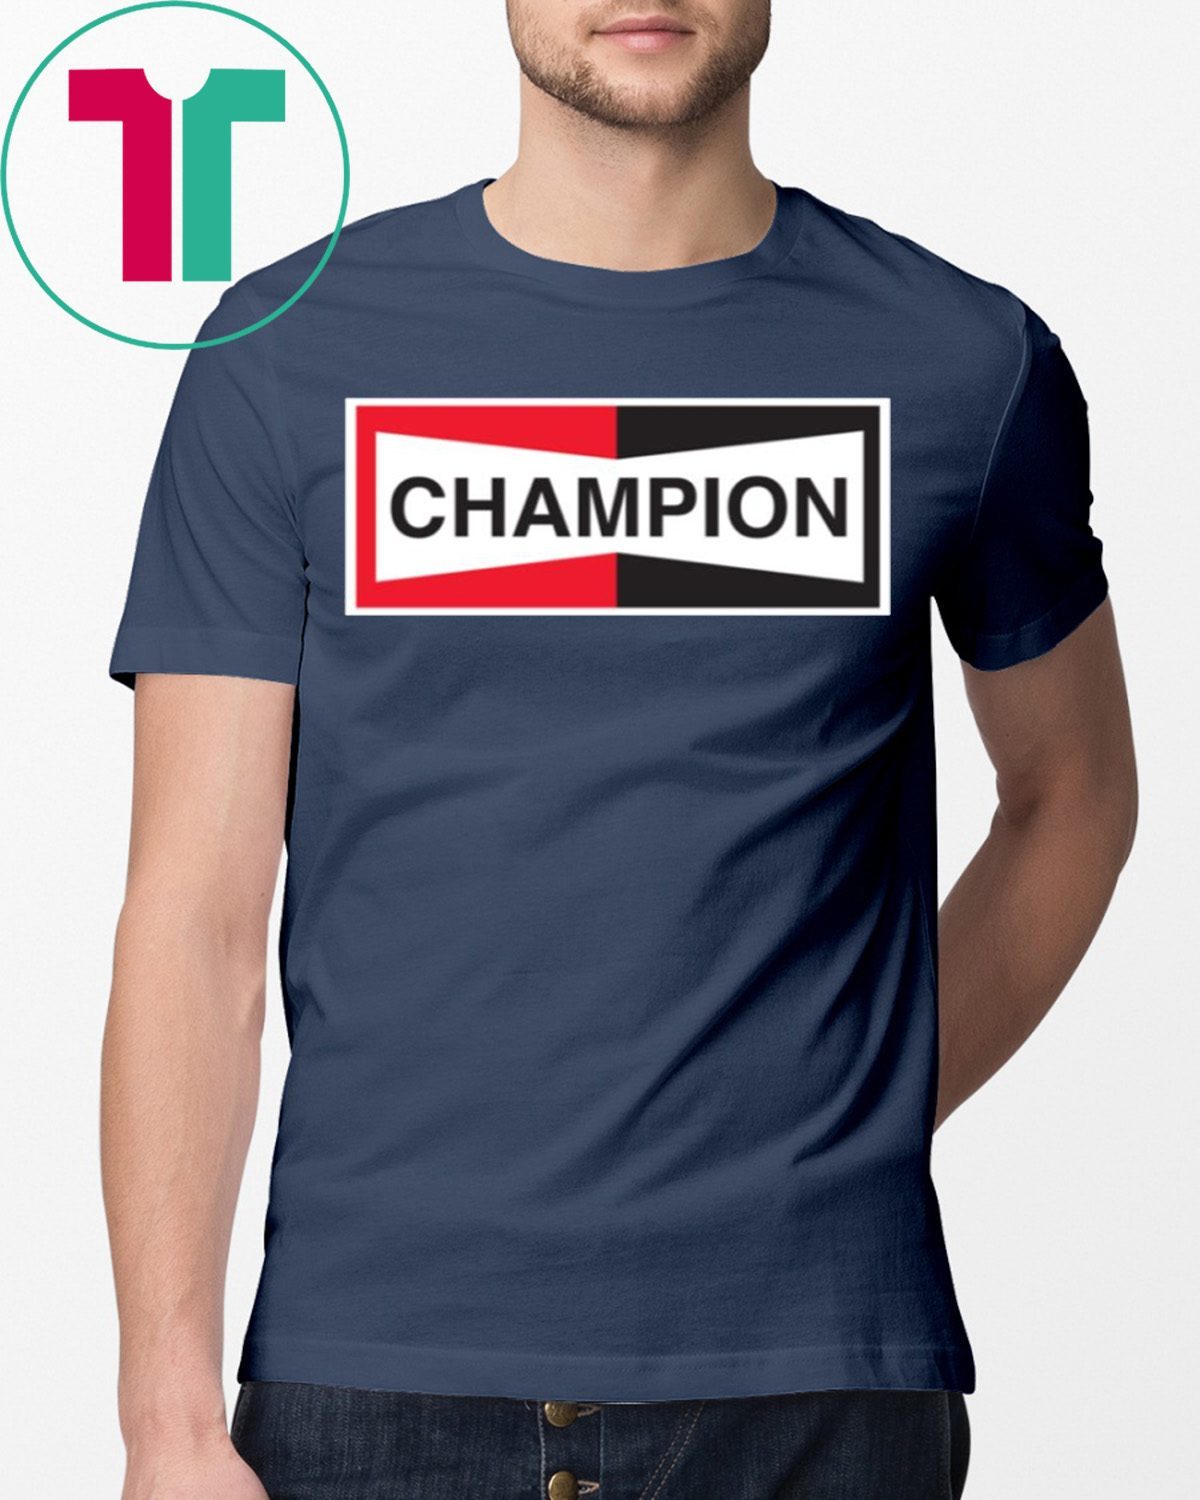 Champion Spark Plug 2019 Shirt - ShirtsMango Office